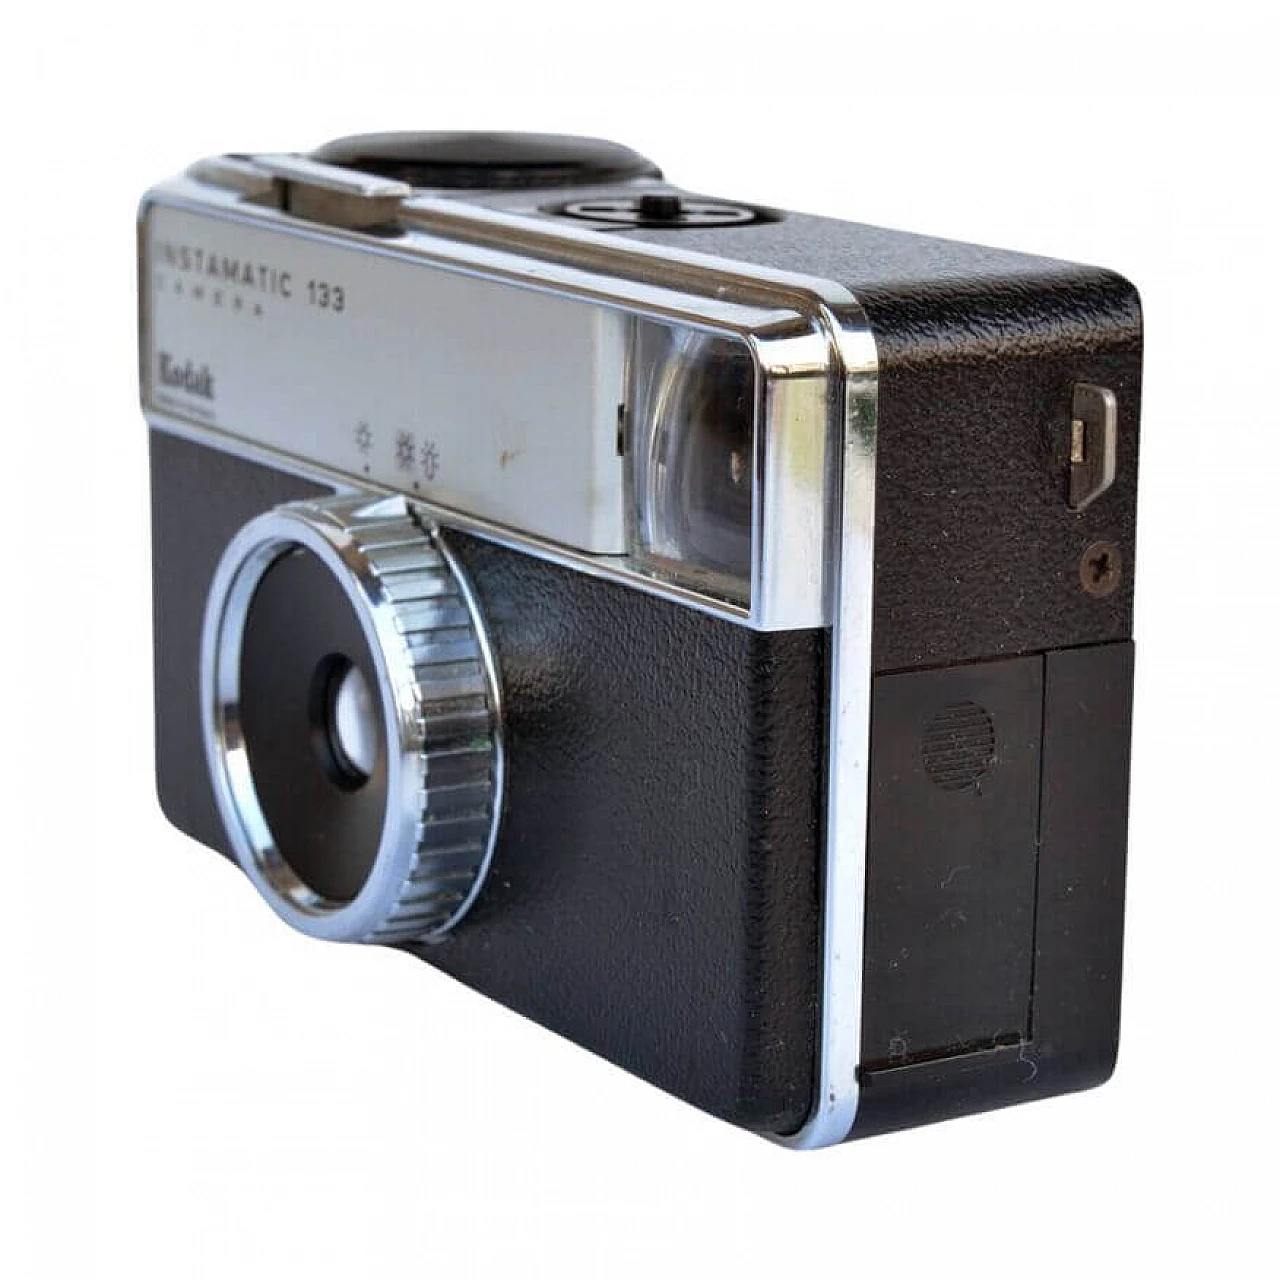 Macchina fotografica analogica Kodak Instamatic 133, anni '70 1